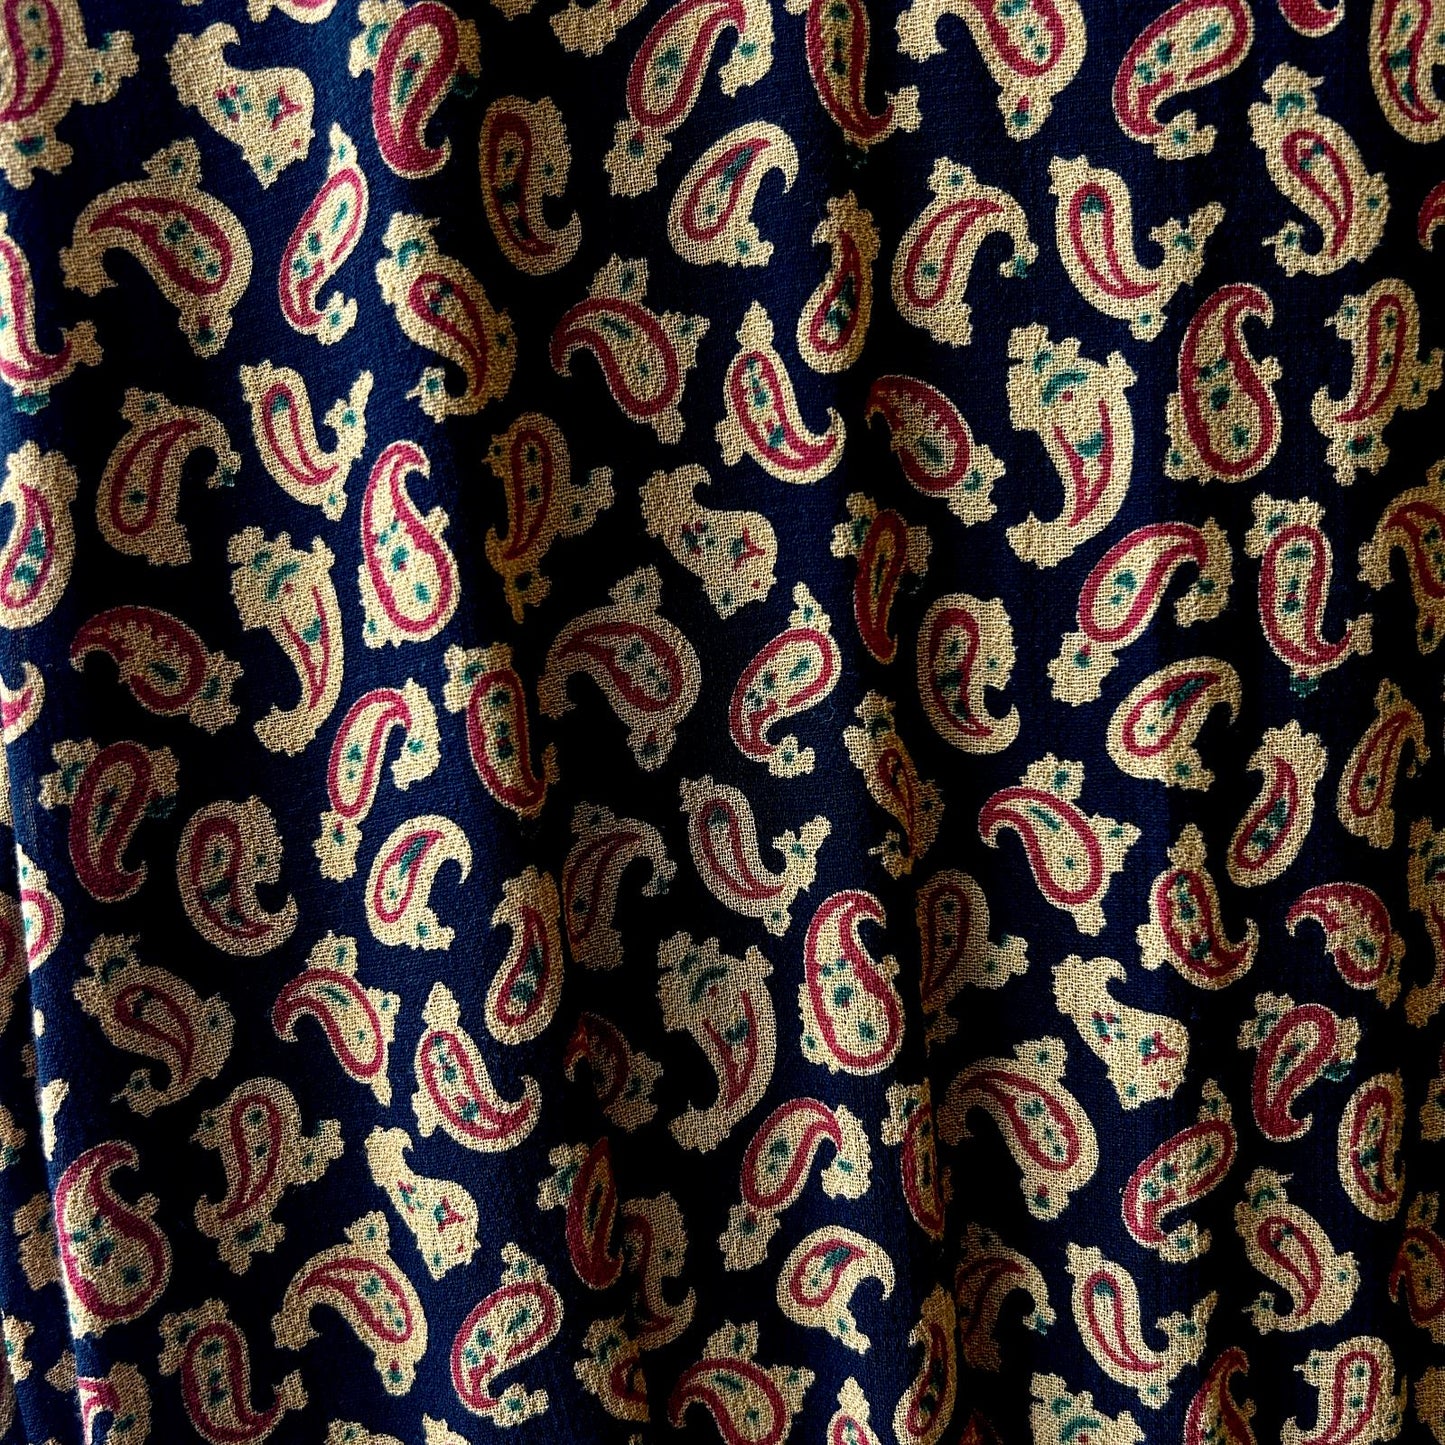 38 - YSL Yves Saint Laurent Rive Gauche 90s Vintage Paisley Print Dress 0125LK